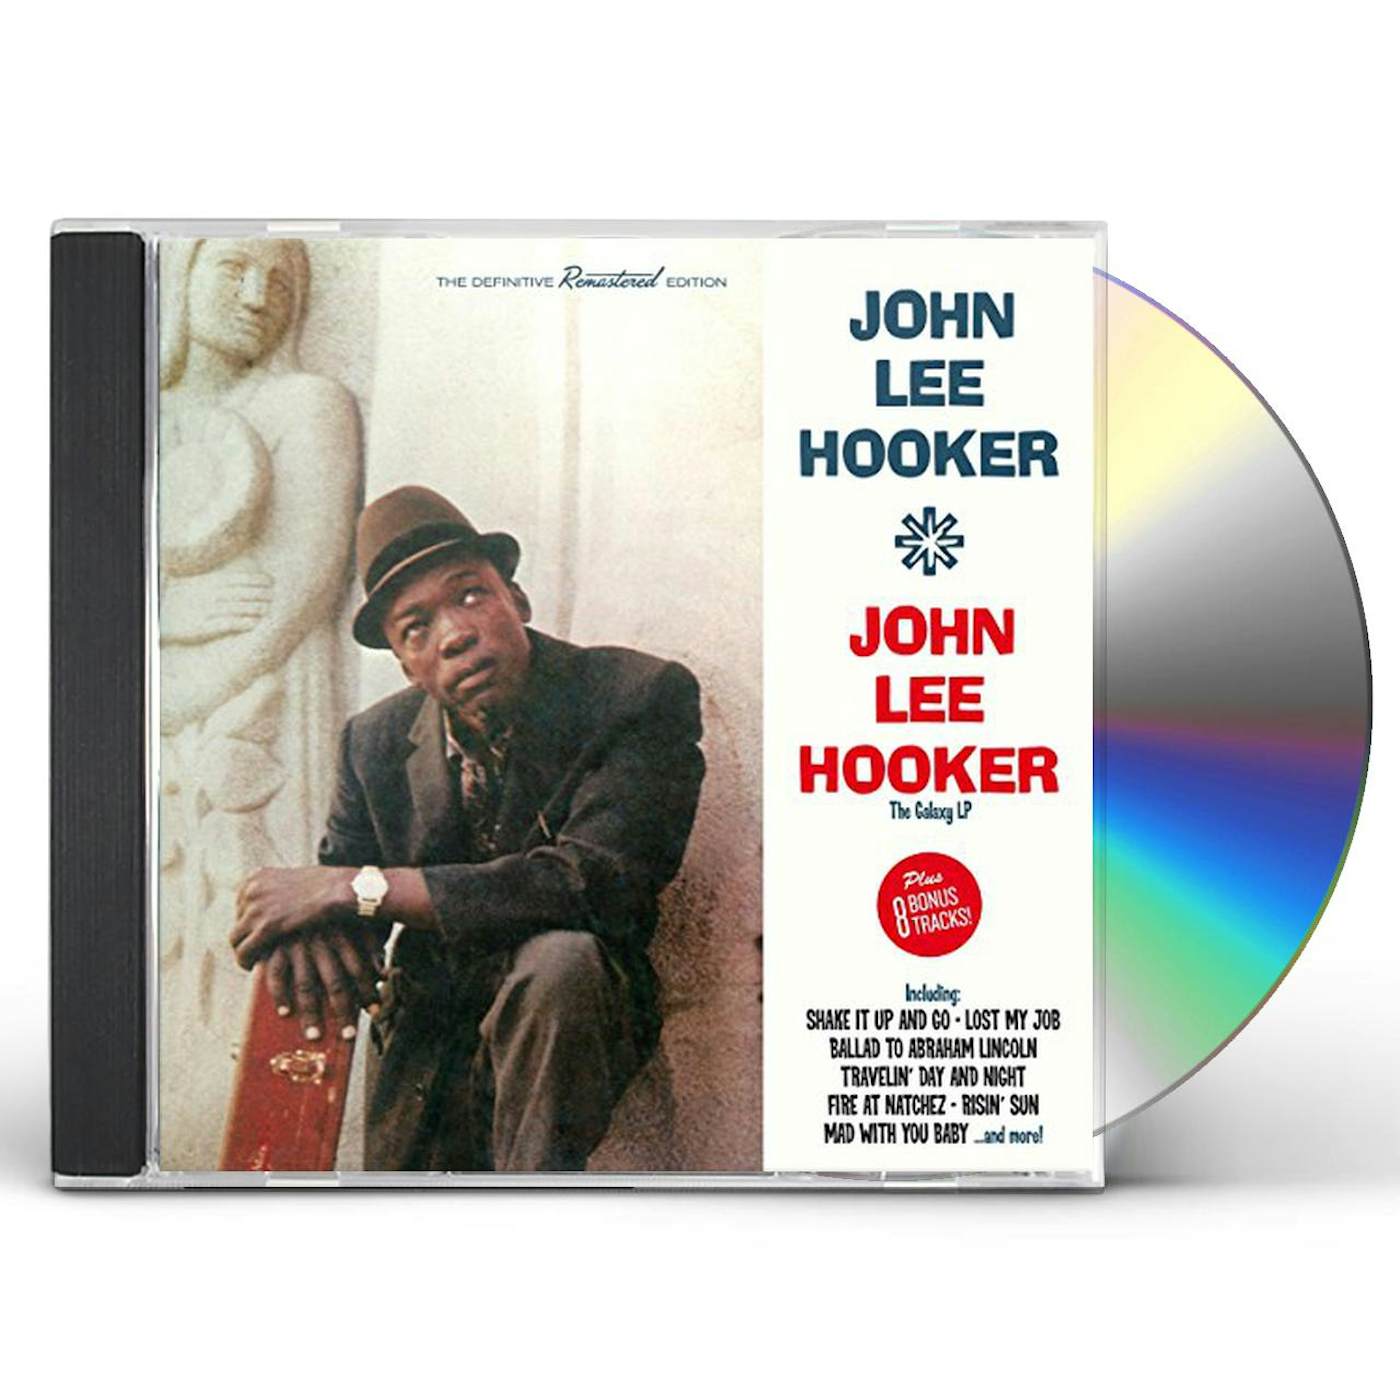 JOHN LEE HOOKER (THE GALAXY LP) + 8 BONUS TRACKS CD